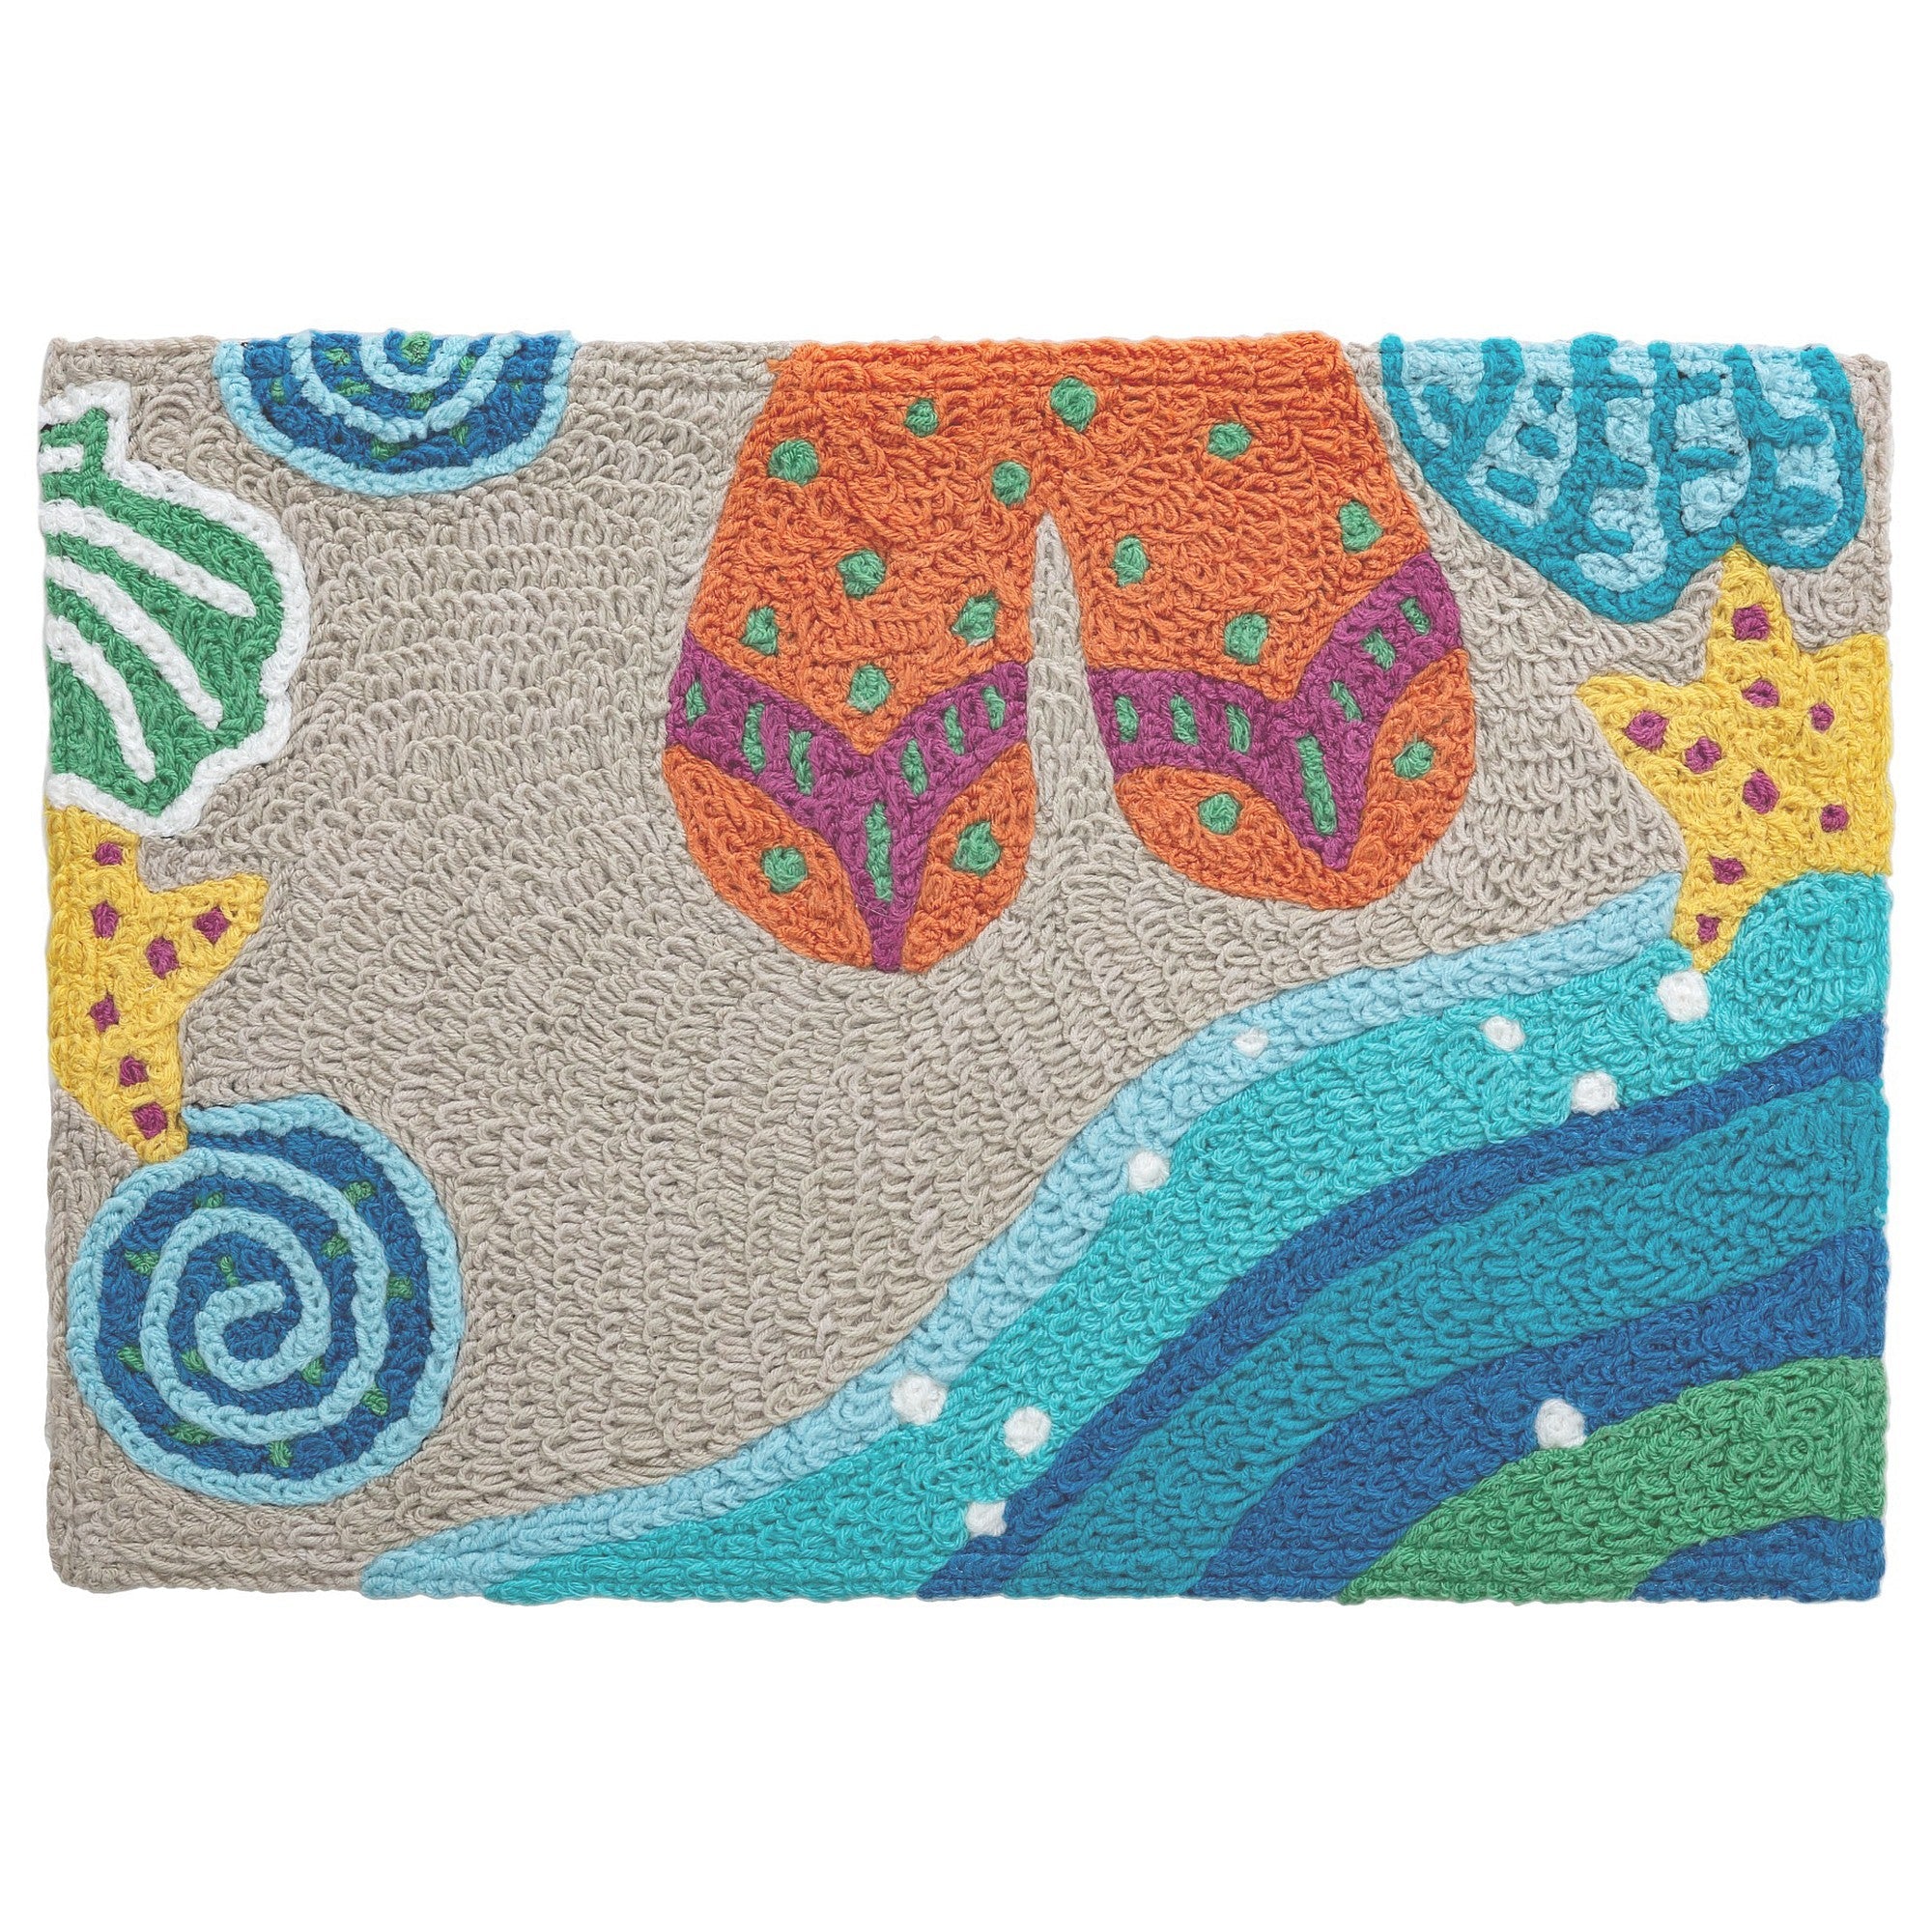 Washable Doormat Rug | Fade-Resistant | Beach Days Doormat | Ruggable